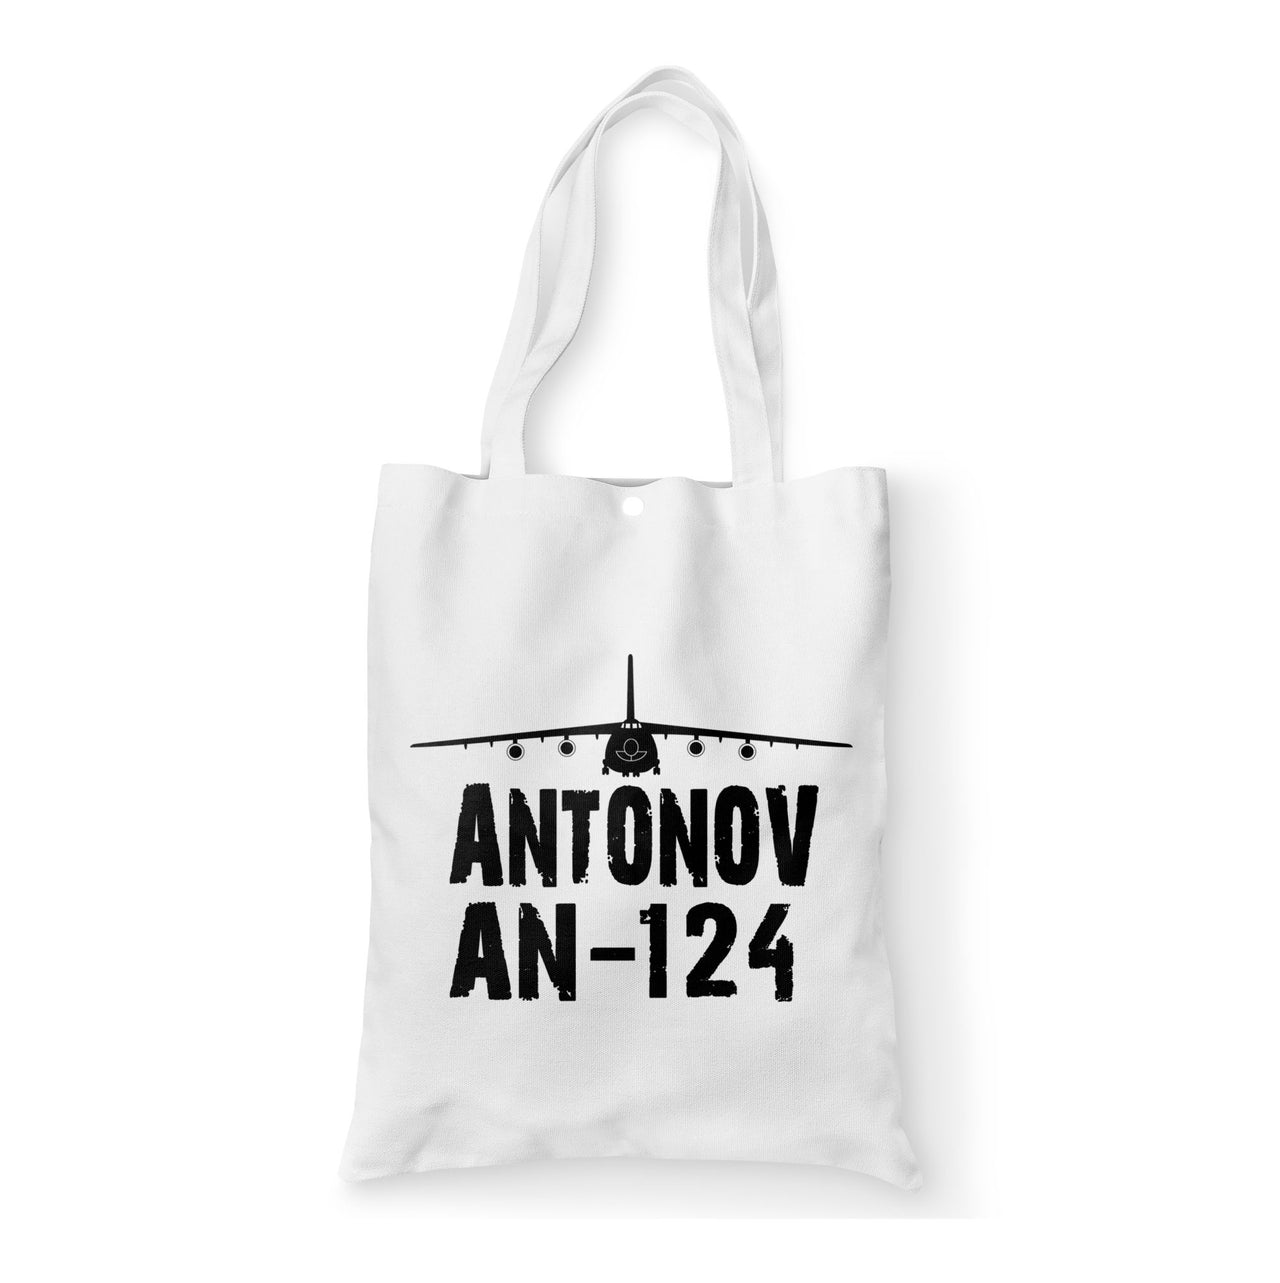 Antonov AN-124 & Plane Designed Tote Bags